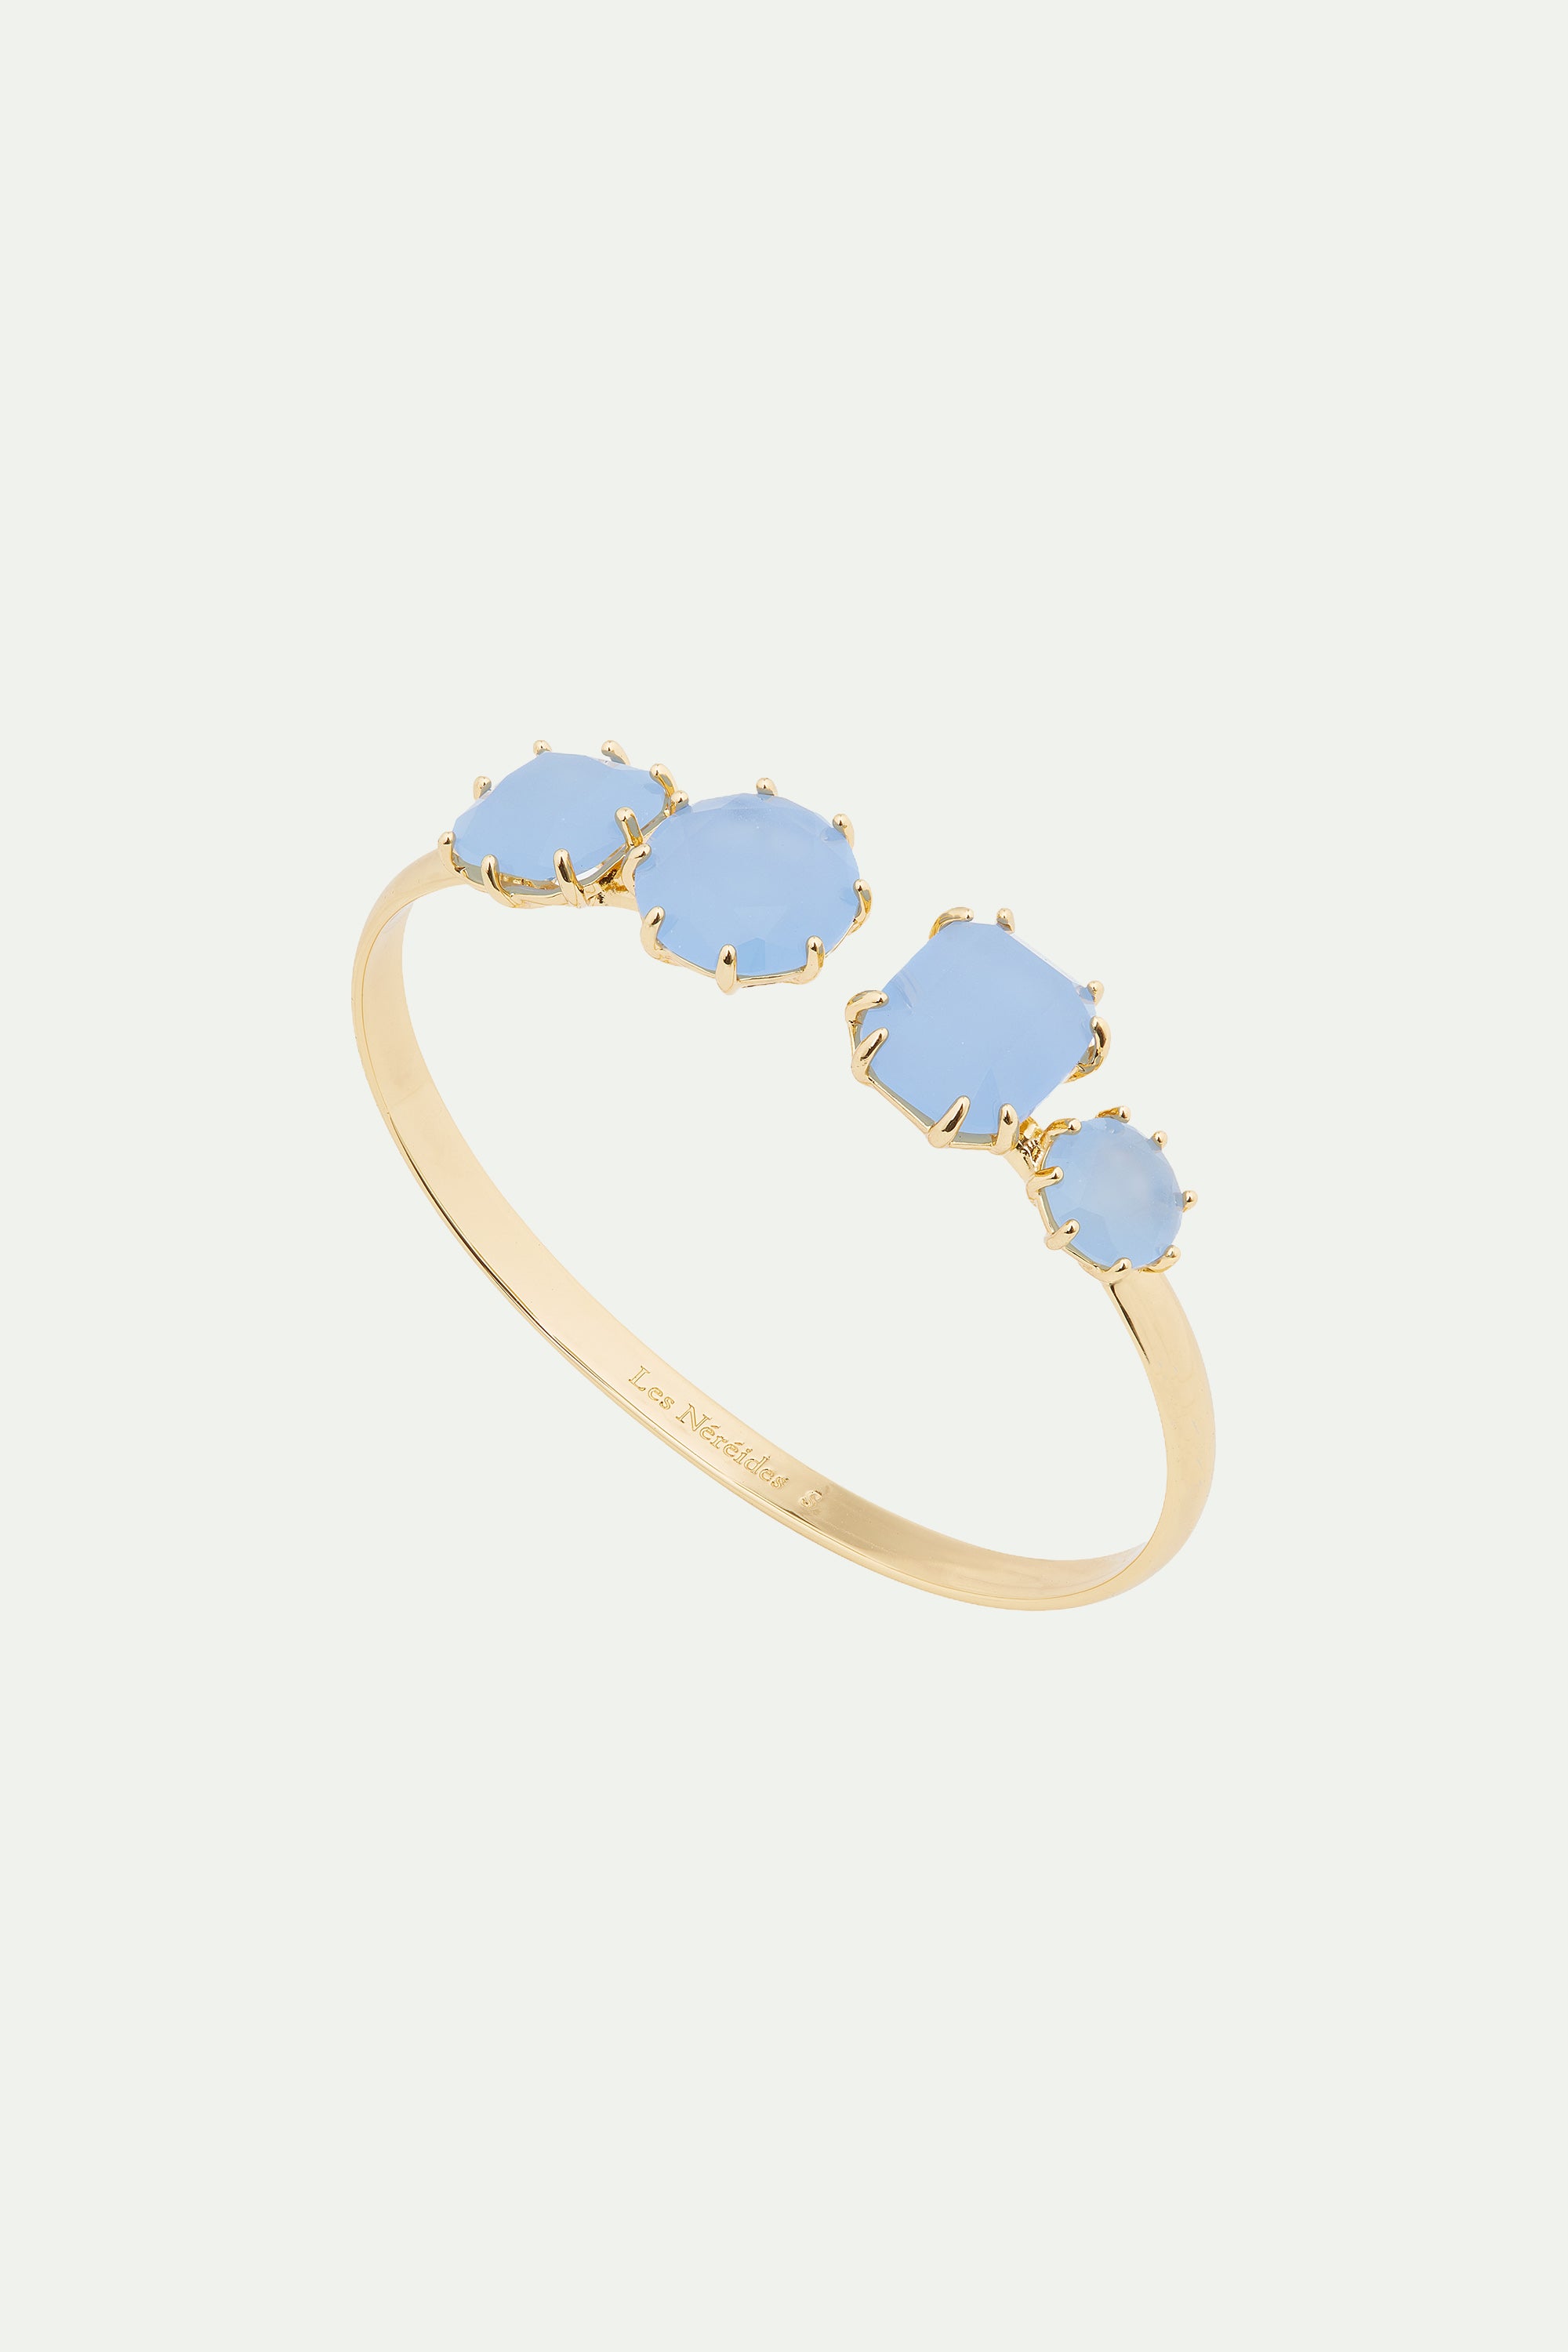 Sky blue Diamantine 4 stone bangle bracelet